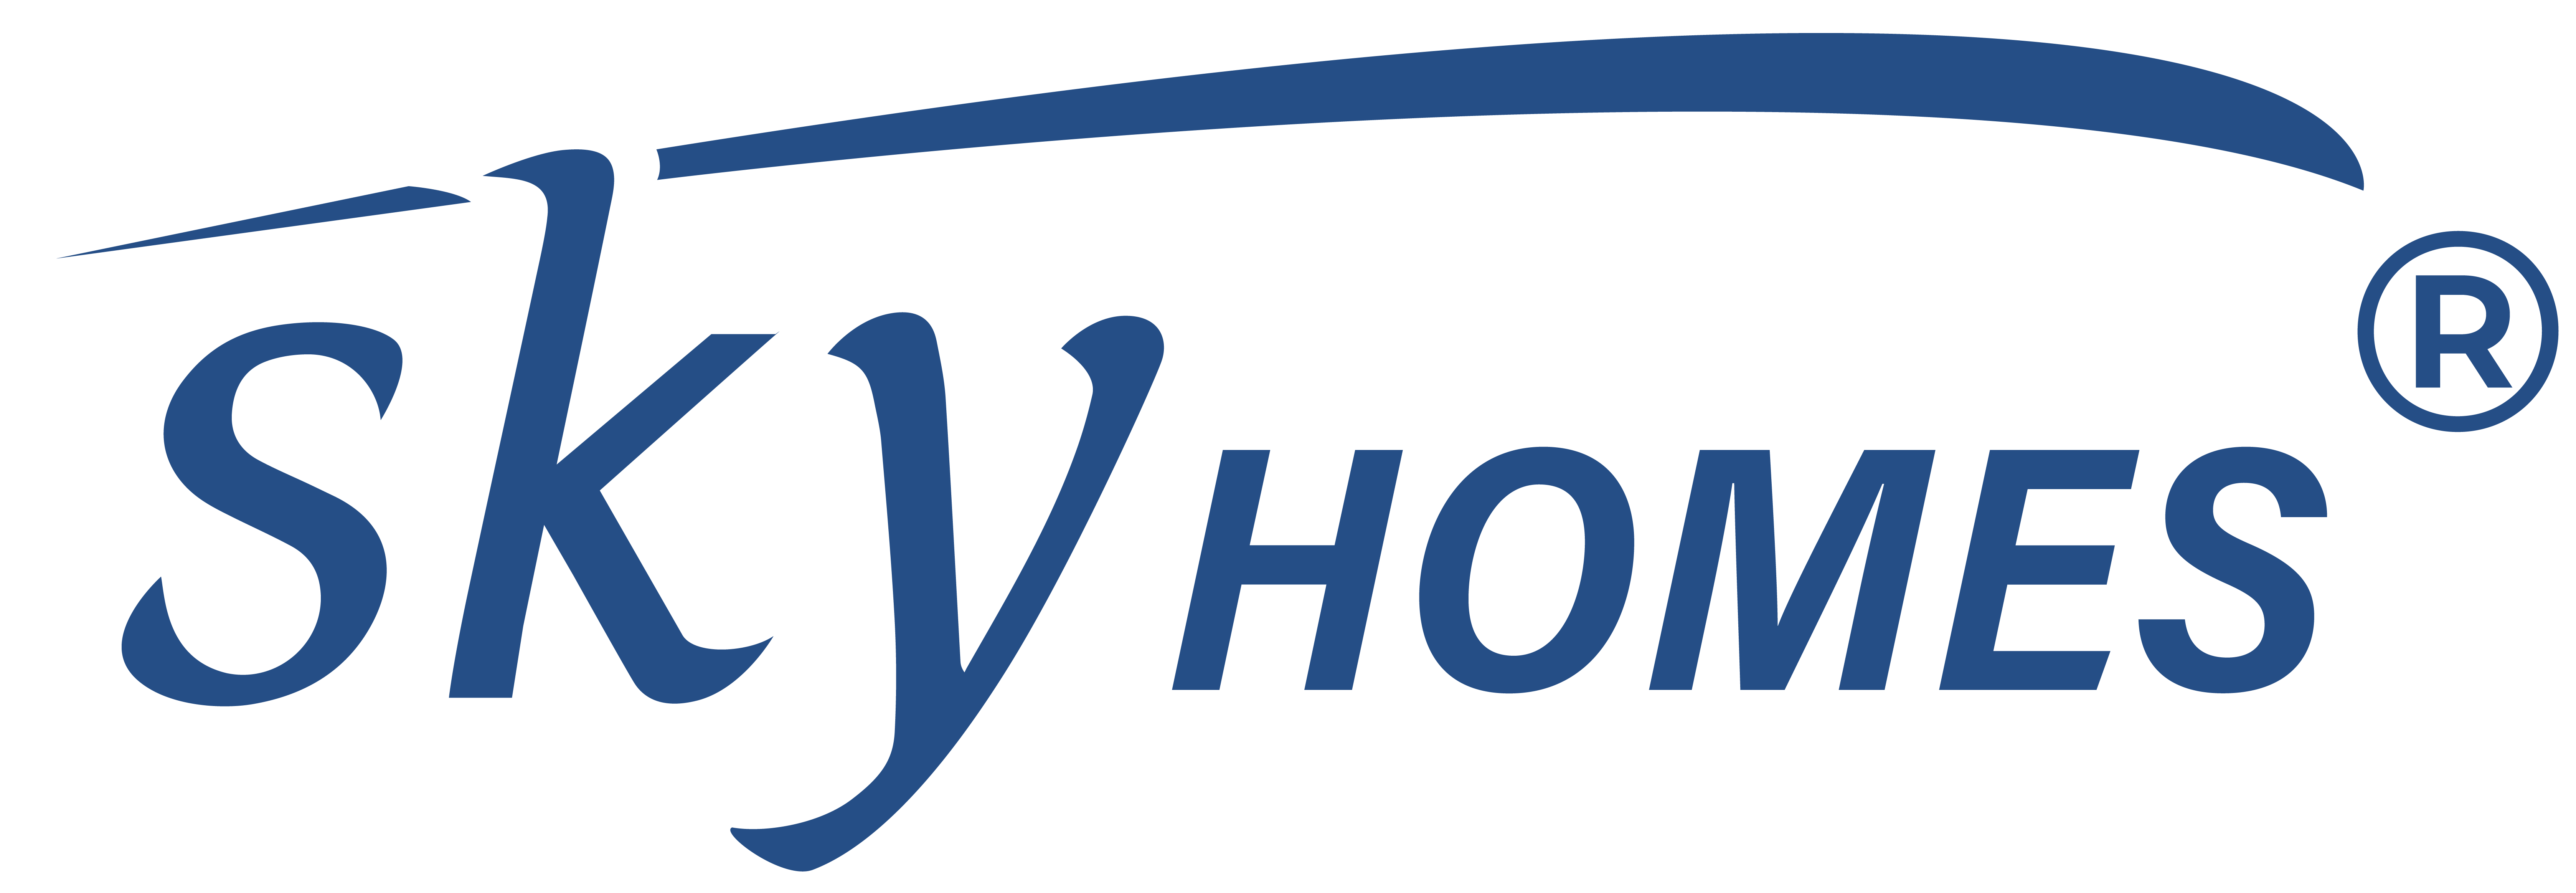 Skyhomes Logo